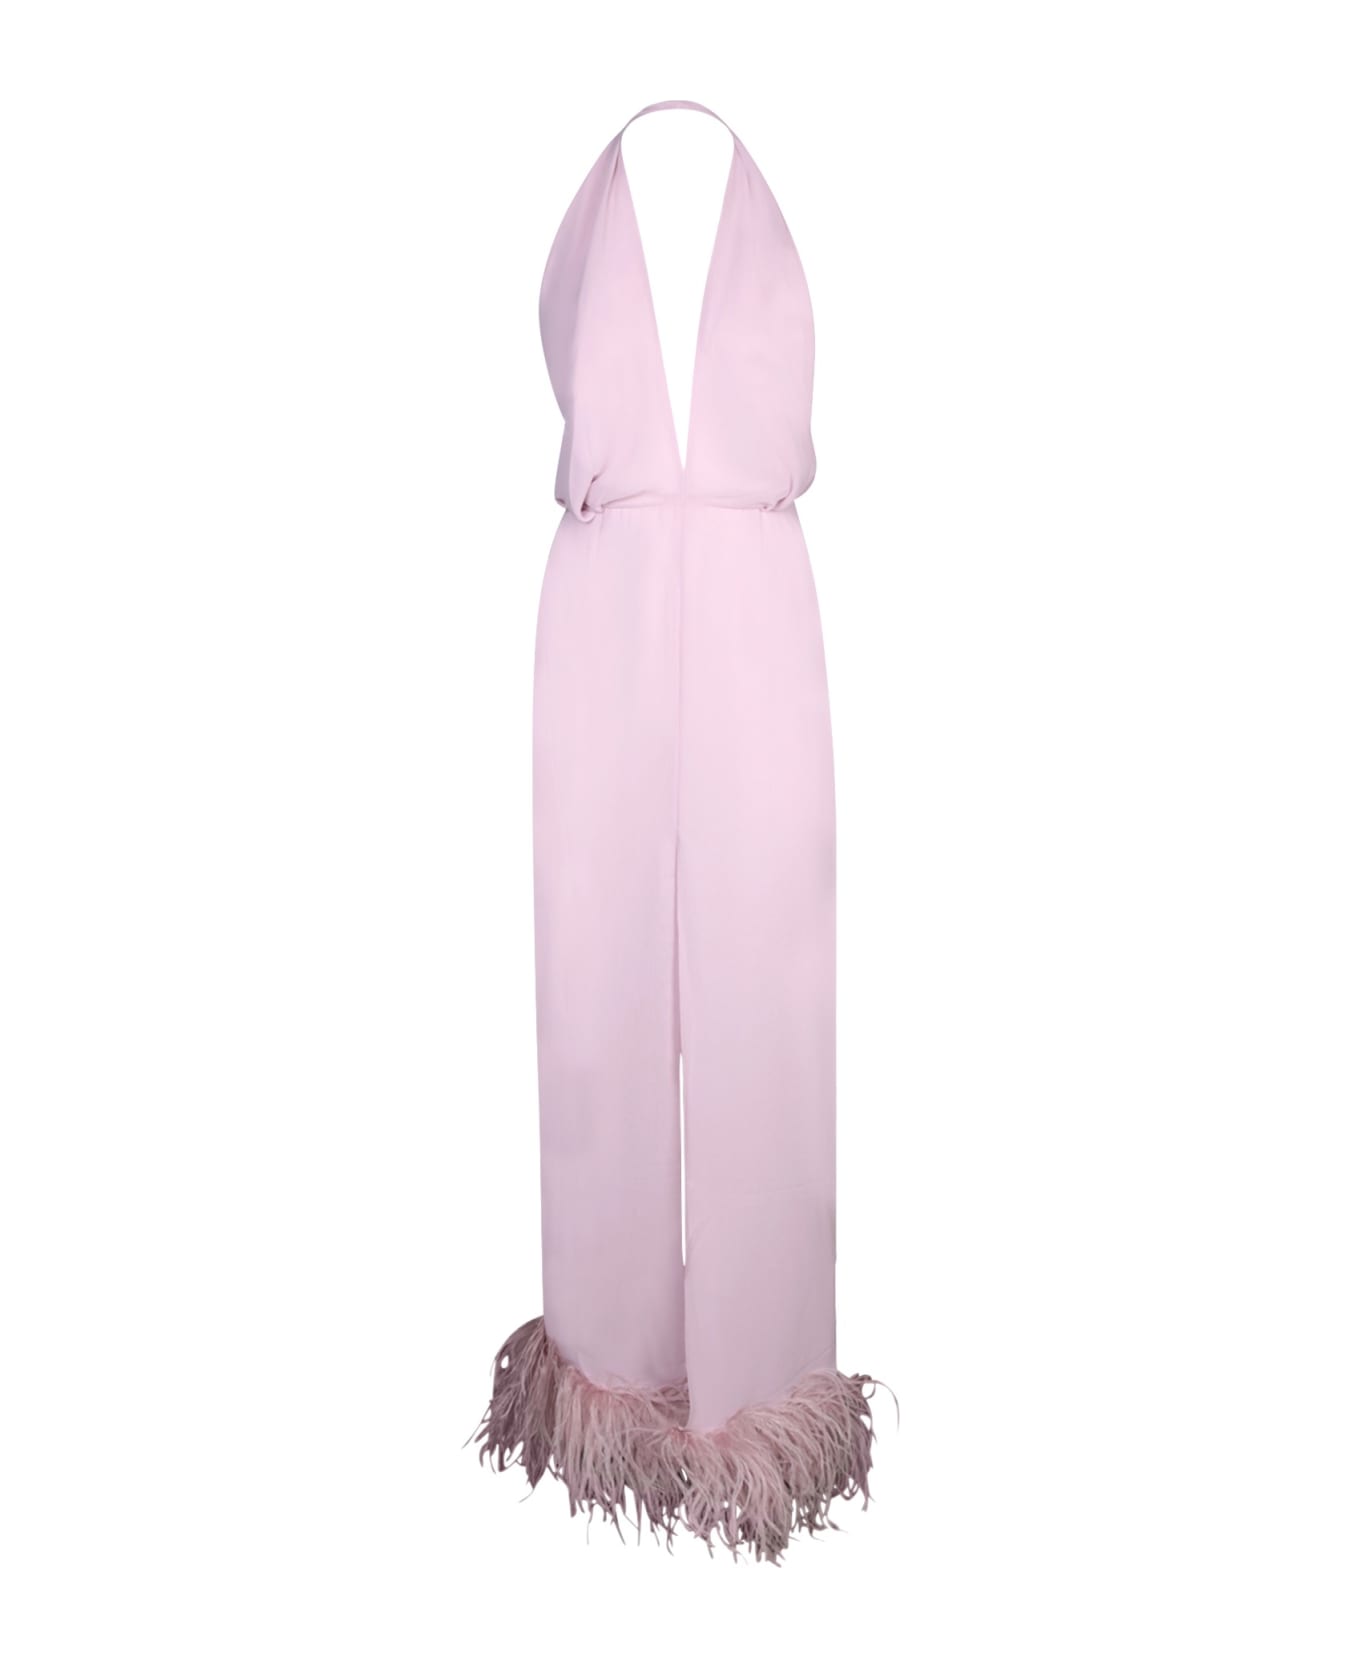 16arlington Isolde Mauve Dress - Pink